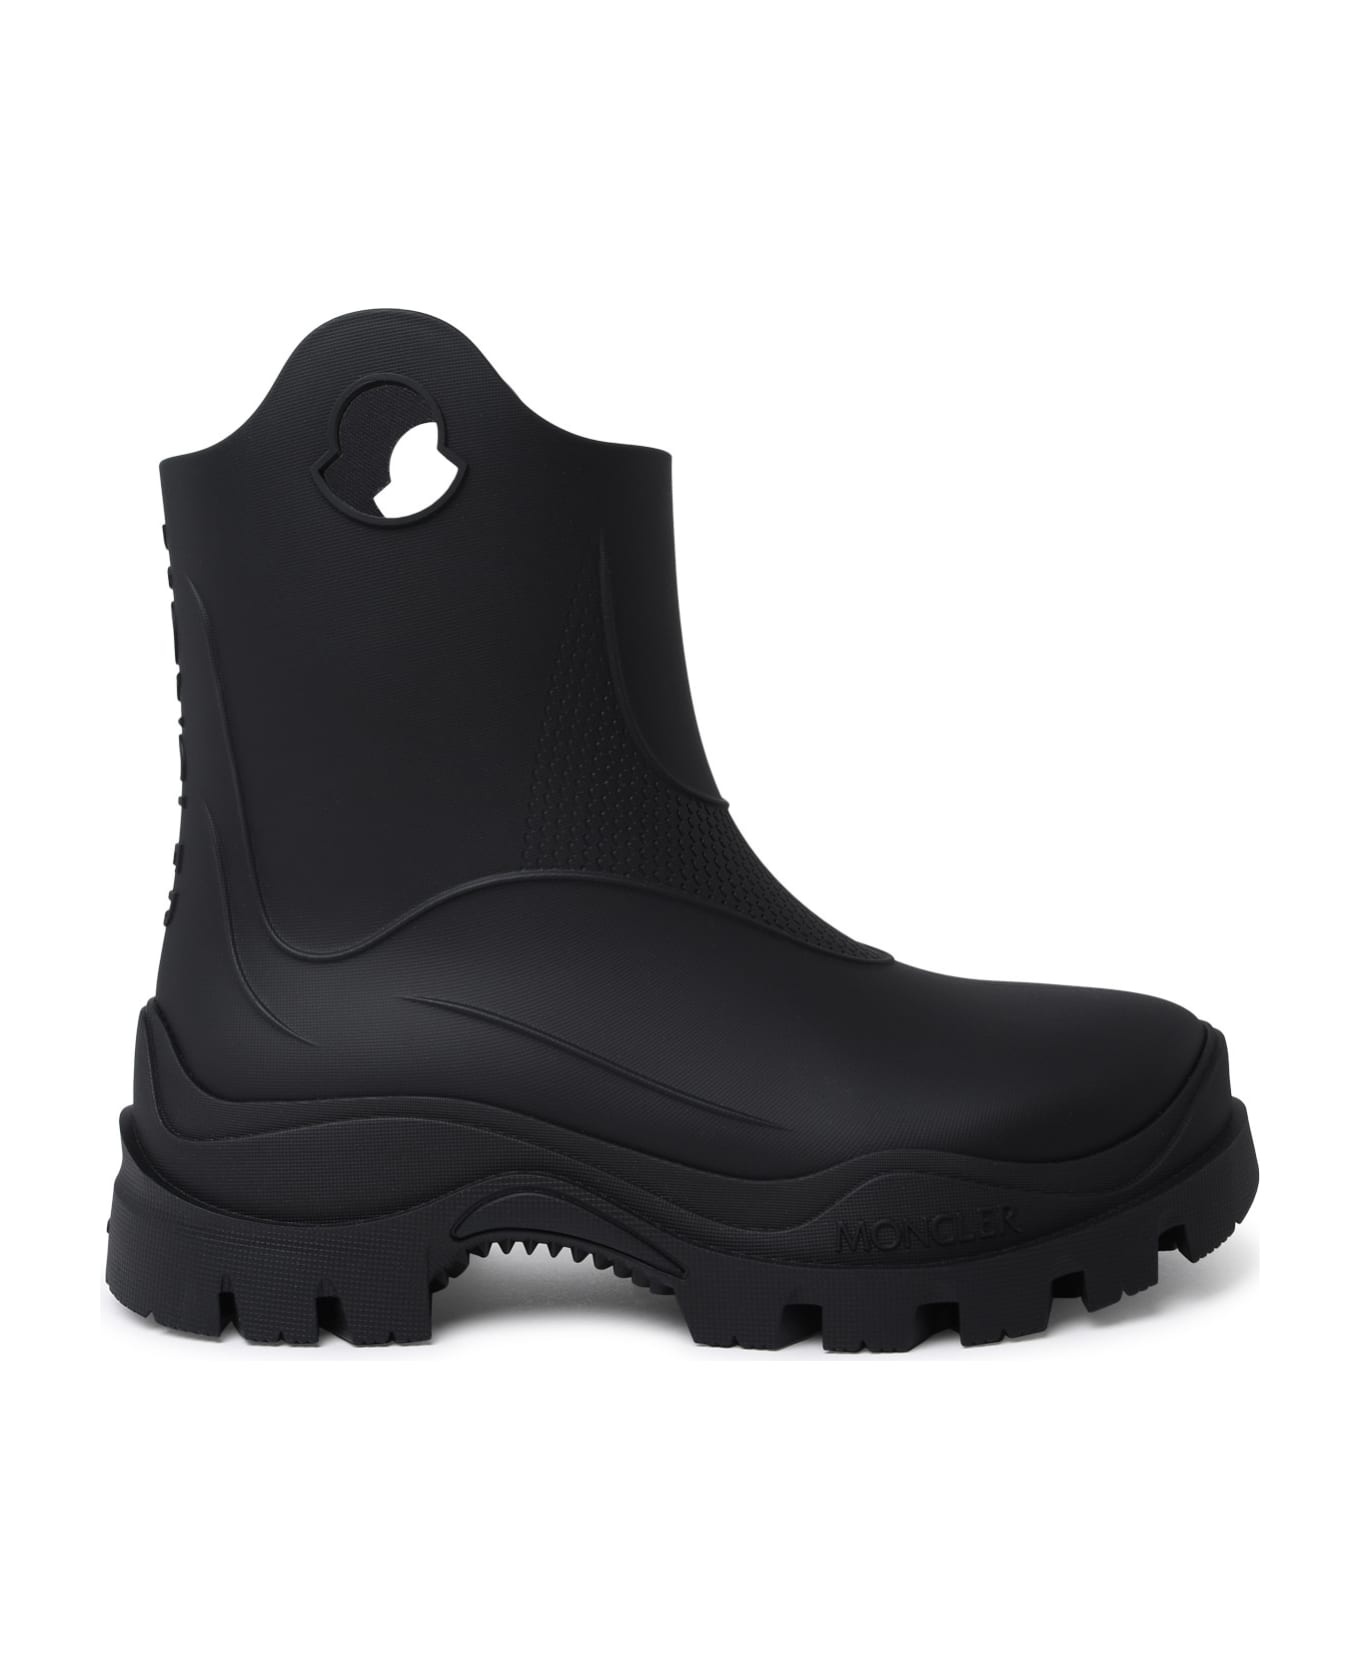 'misty' Black Pvc Rain Boots - 1